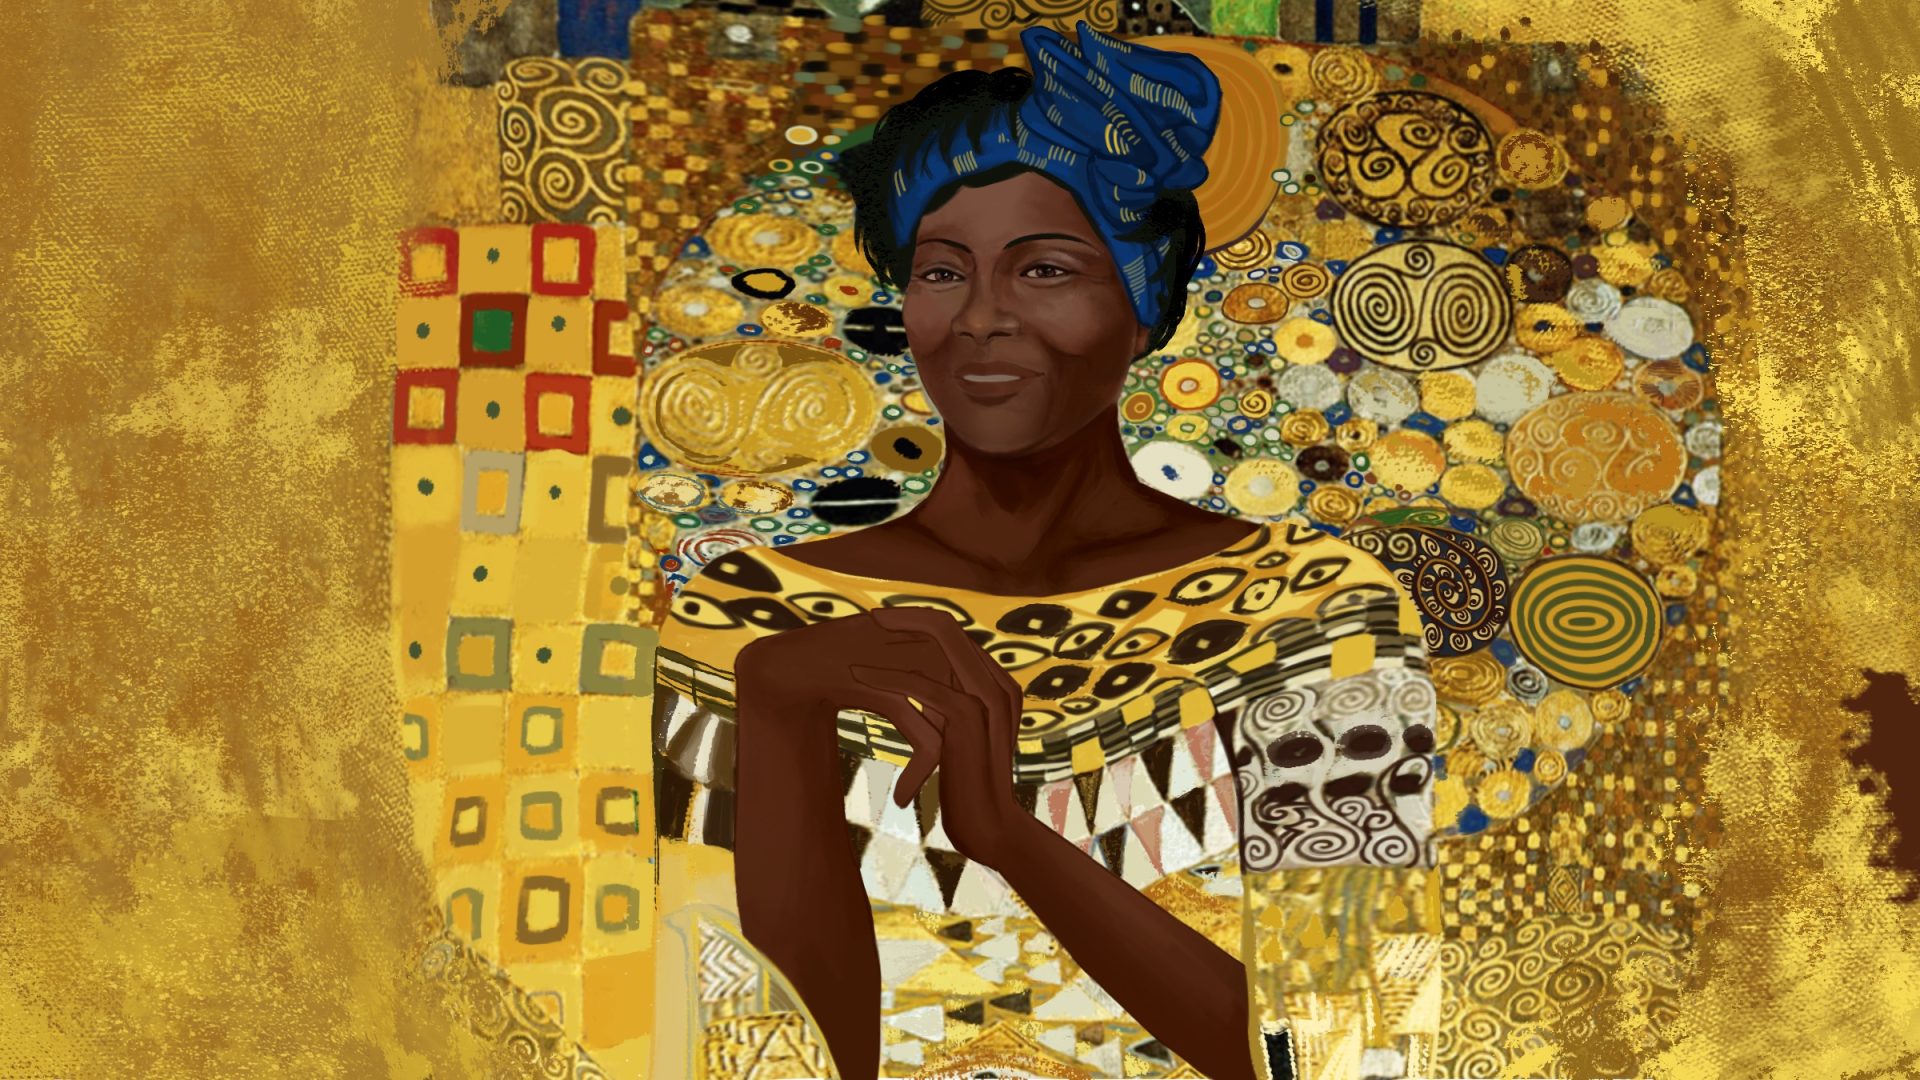 Portrait of Wangari Maathia in the style of Austrian painter Gustav Klimt’s “Adele Bloch-Bauer II.”